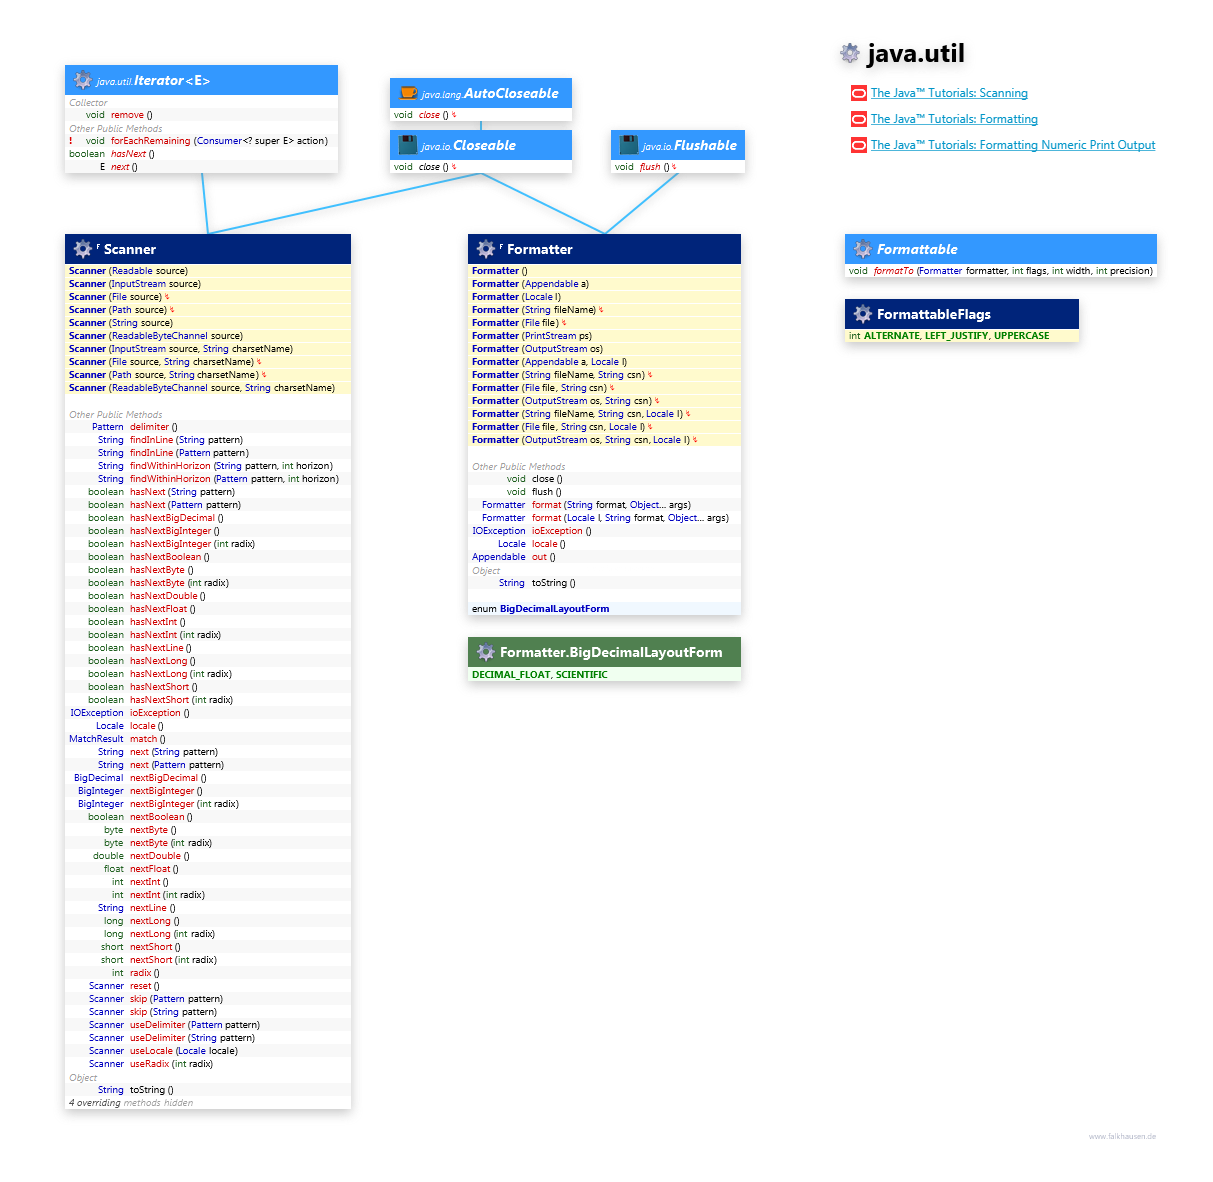 java.util Scanner, Formatter class diagram and api documentation for Java 8